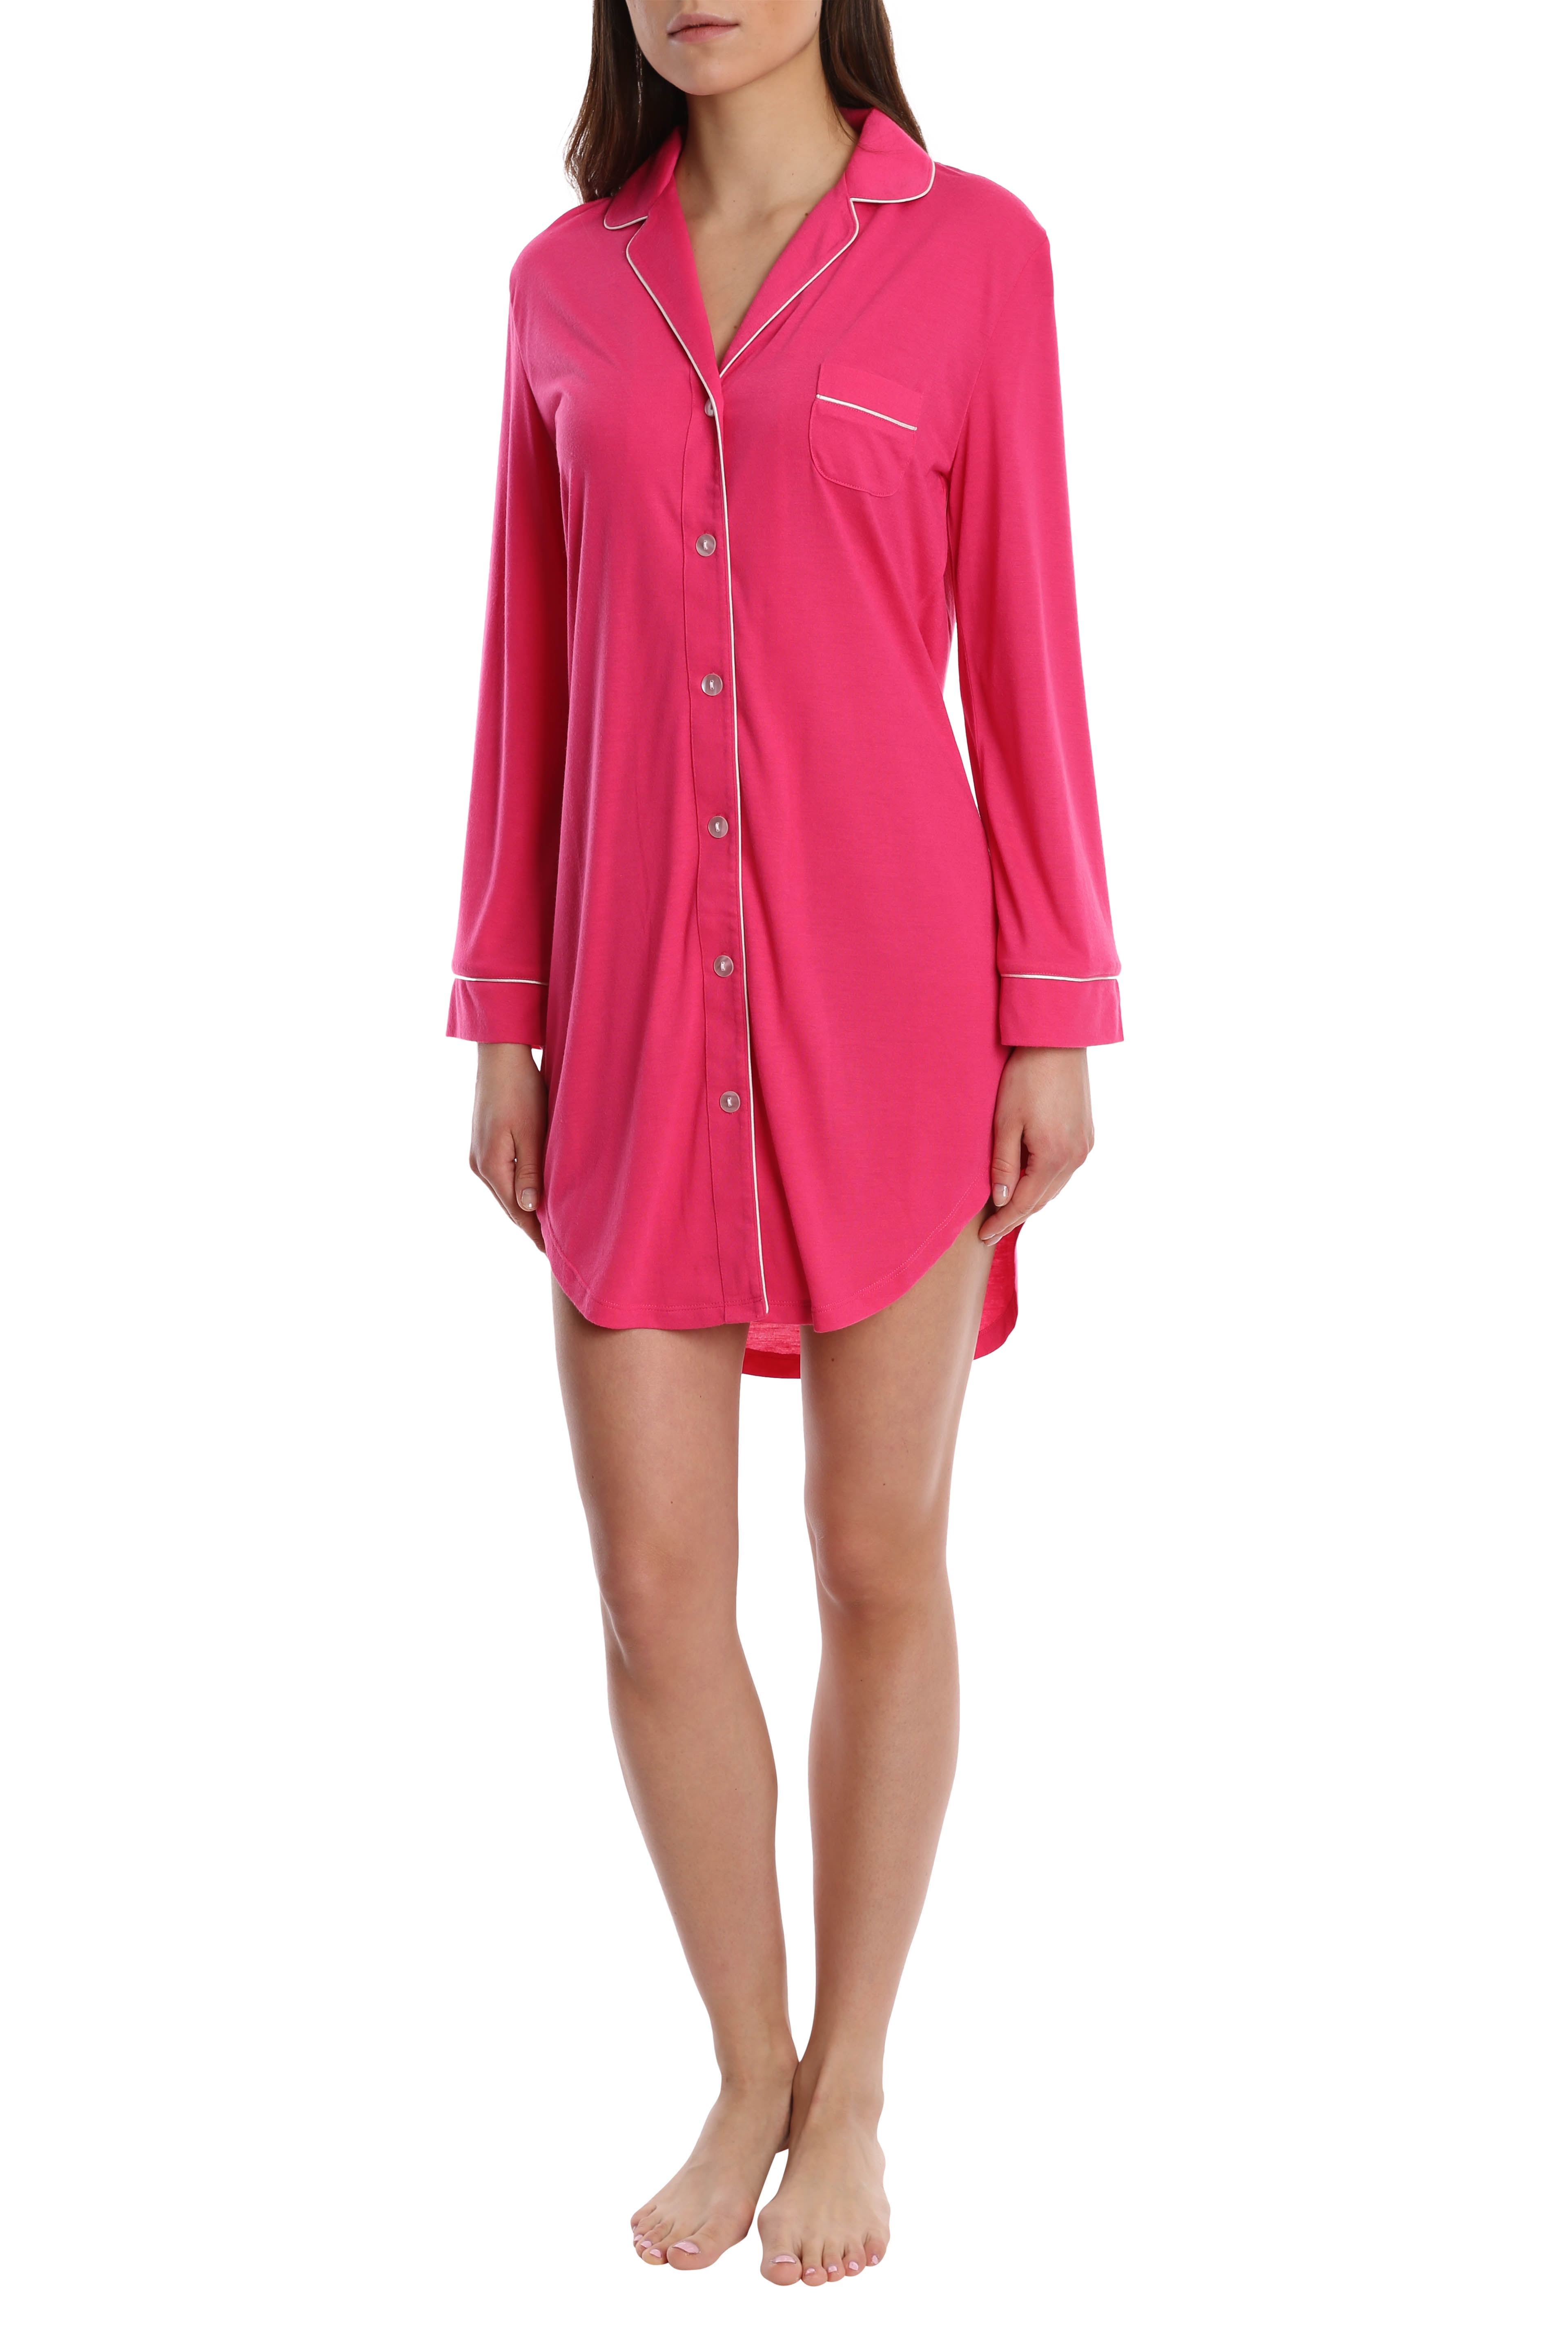 BLIS - Blis Women's Notch Collar Long Sleeve Pajama Sleep Shirt